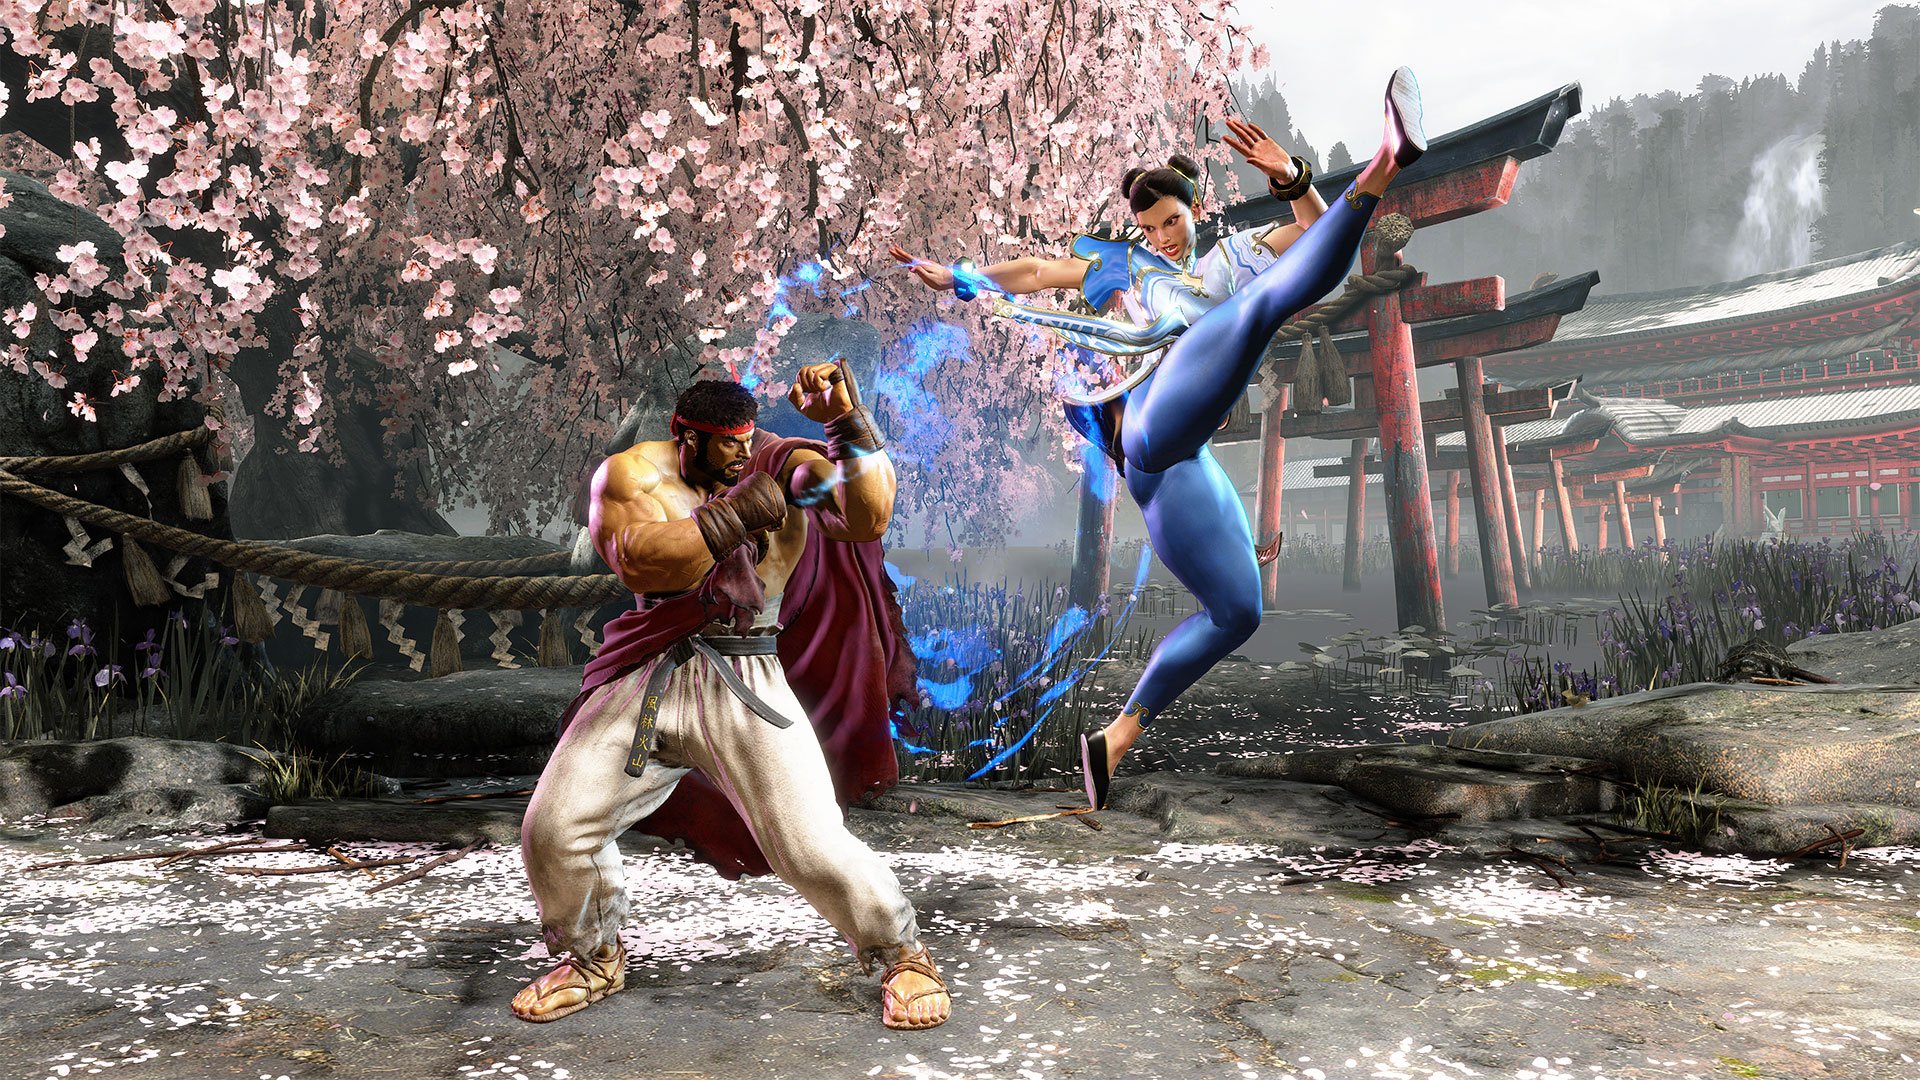 Capcom Announces Street Fighter 6 Closed Beta and Cross Play